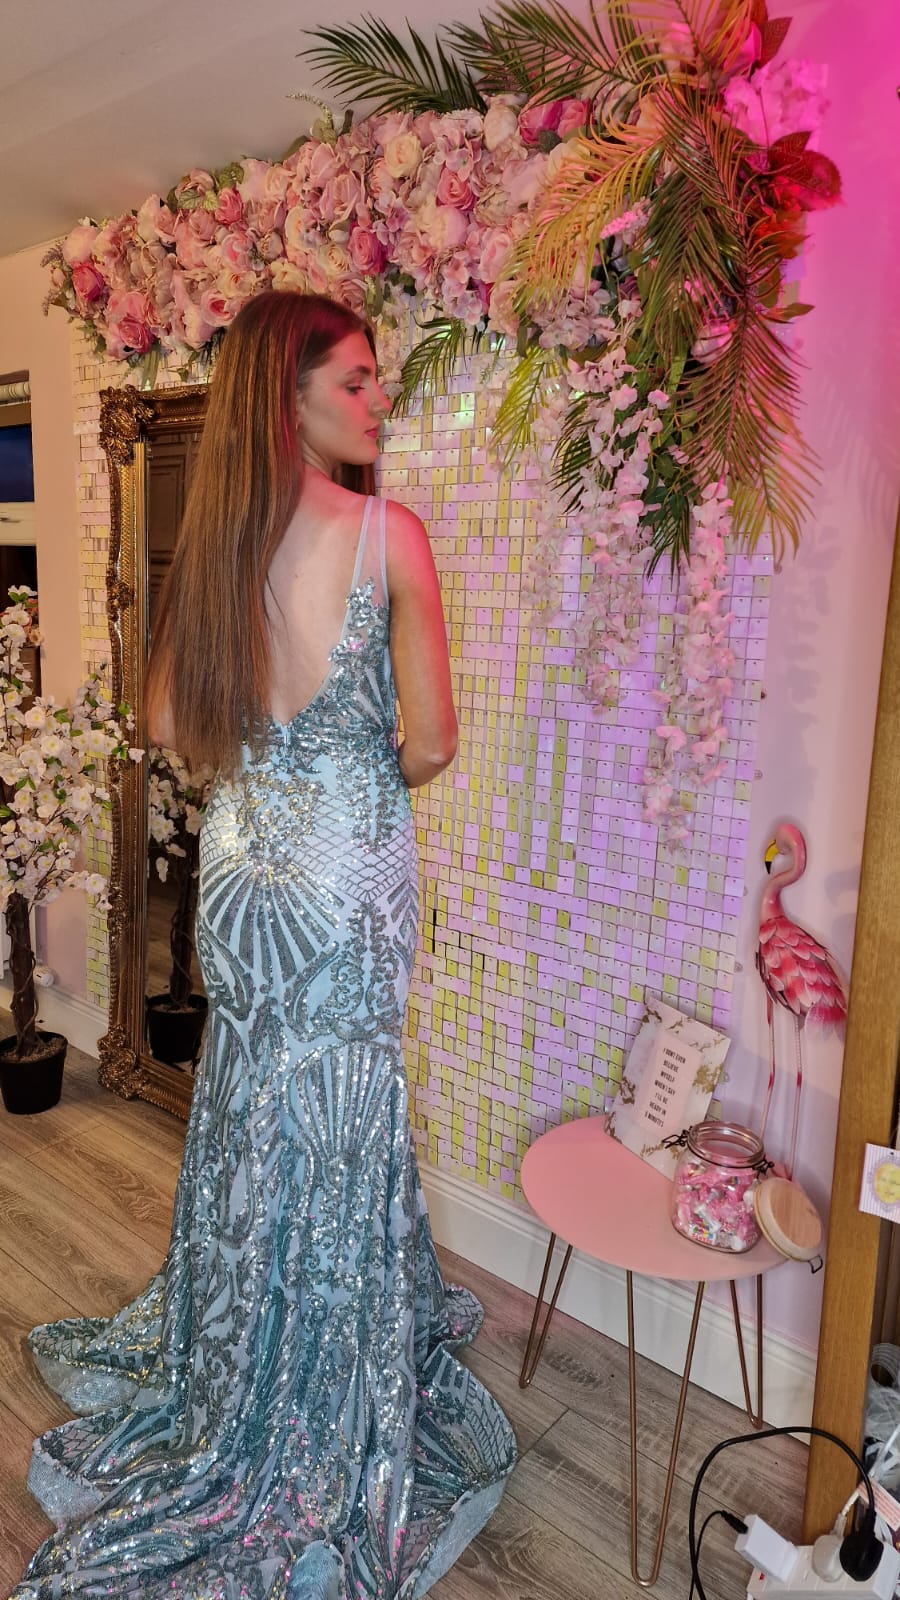 Camryn Sequin Mermaid Formal Prom Dress